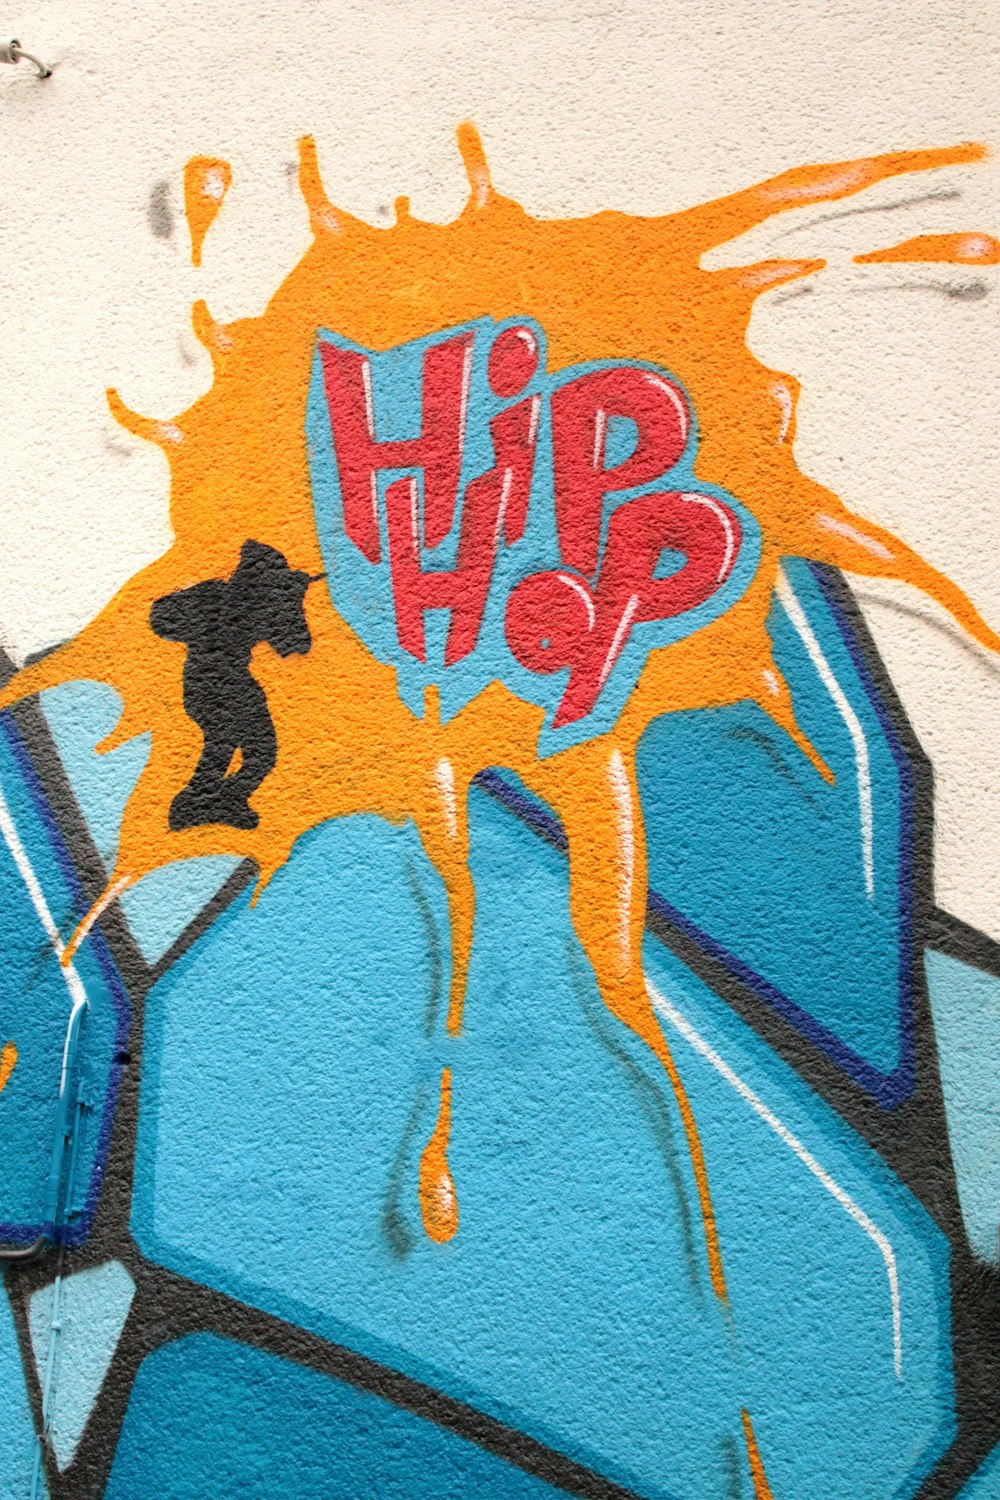 Hip Hop graffiti